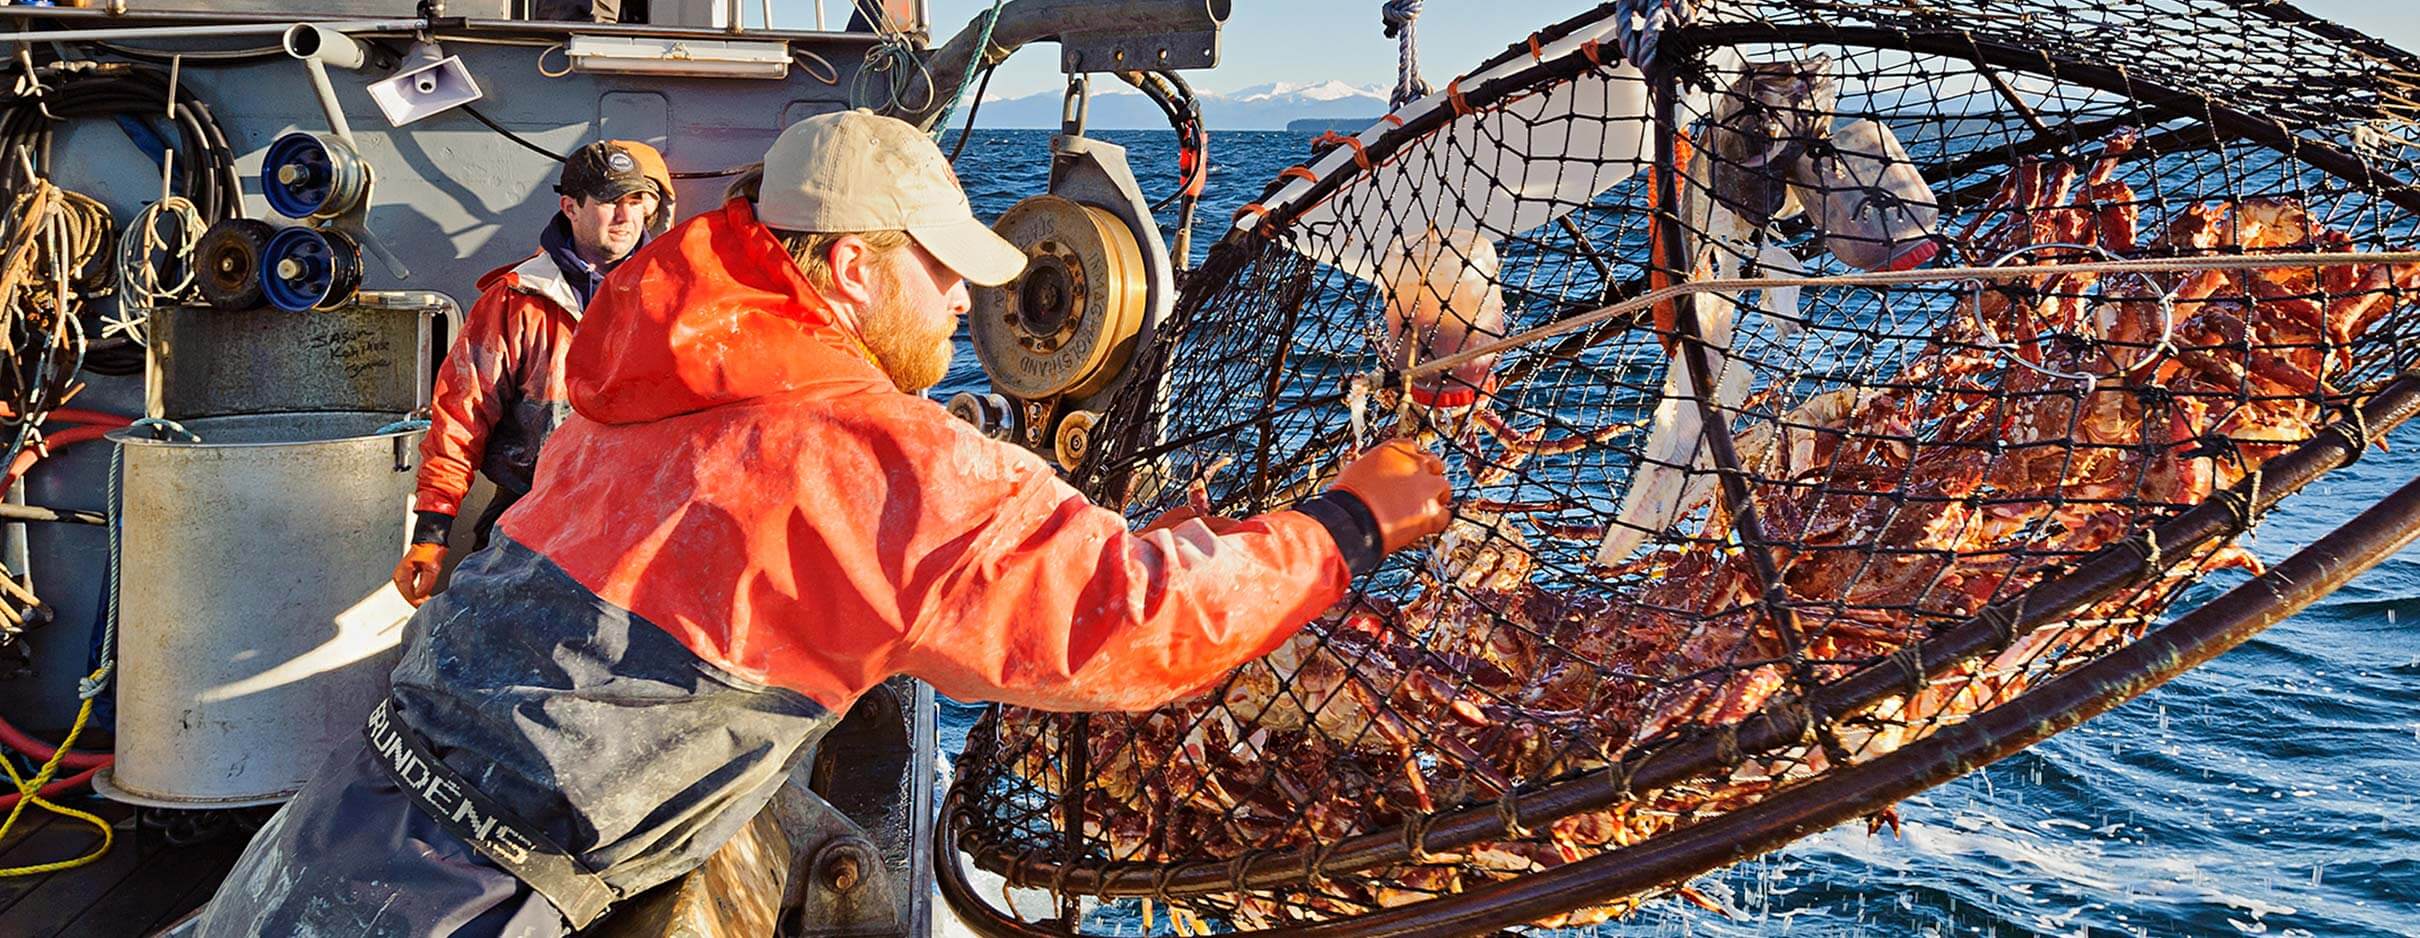 Fishermen pulling in a catch of Alaskan King Crab.